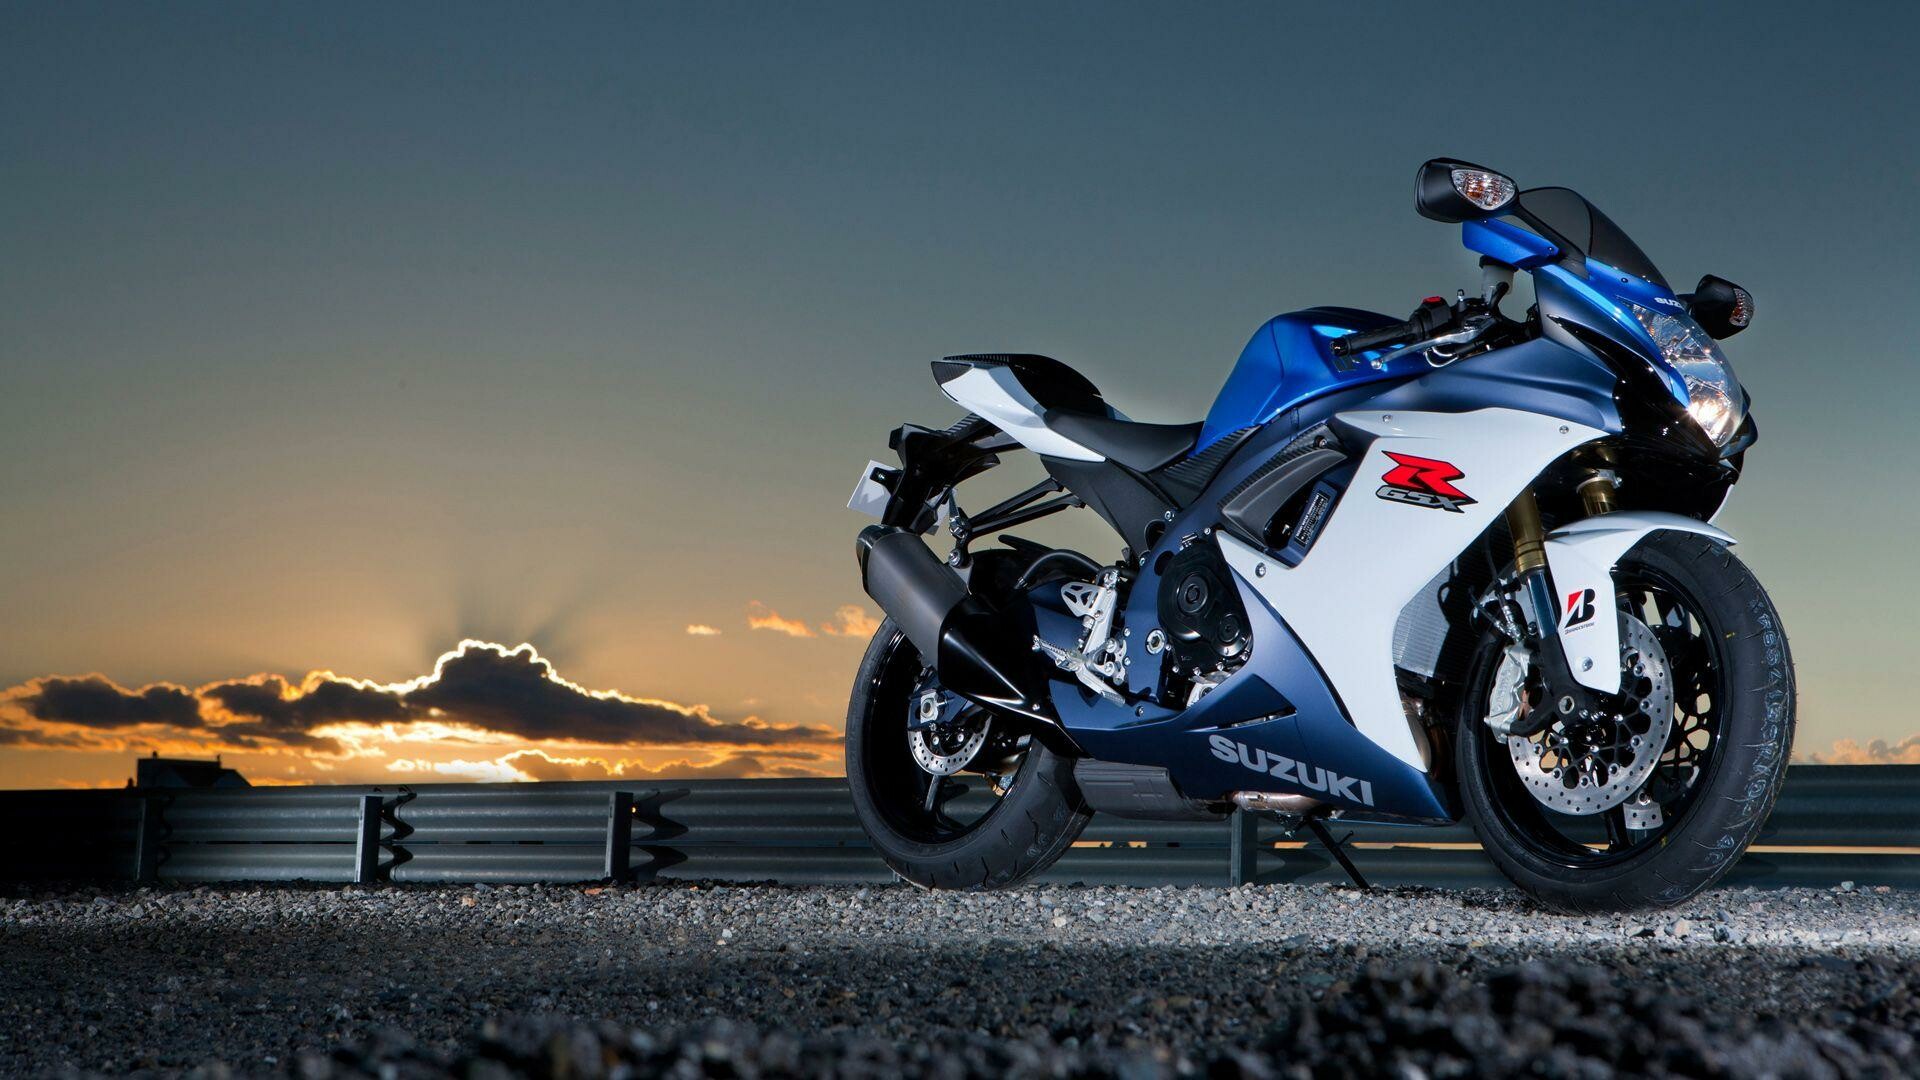 Suzuki motorcycle desktop wallpapers, Powerful bikes, Thrilling rides, Speed and agility, 1920x1080 Full HD Desktop